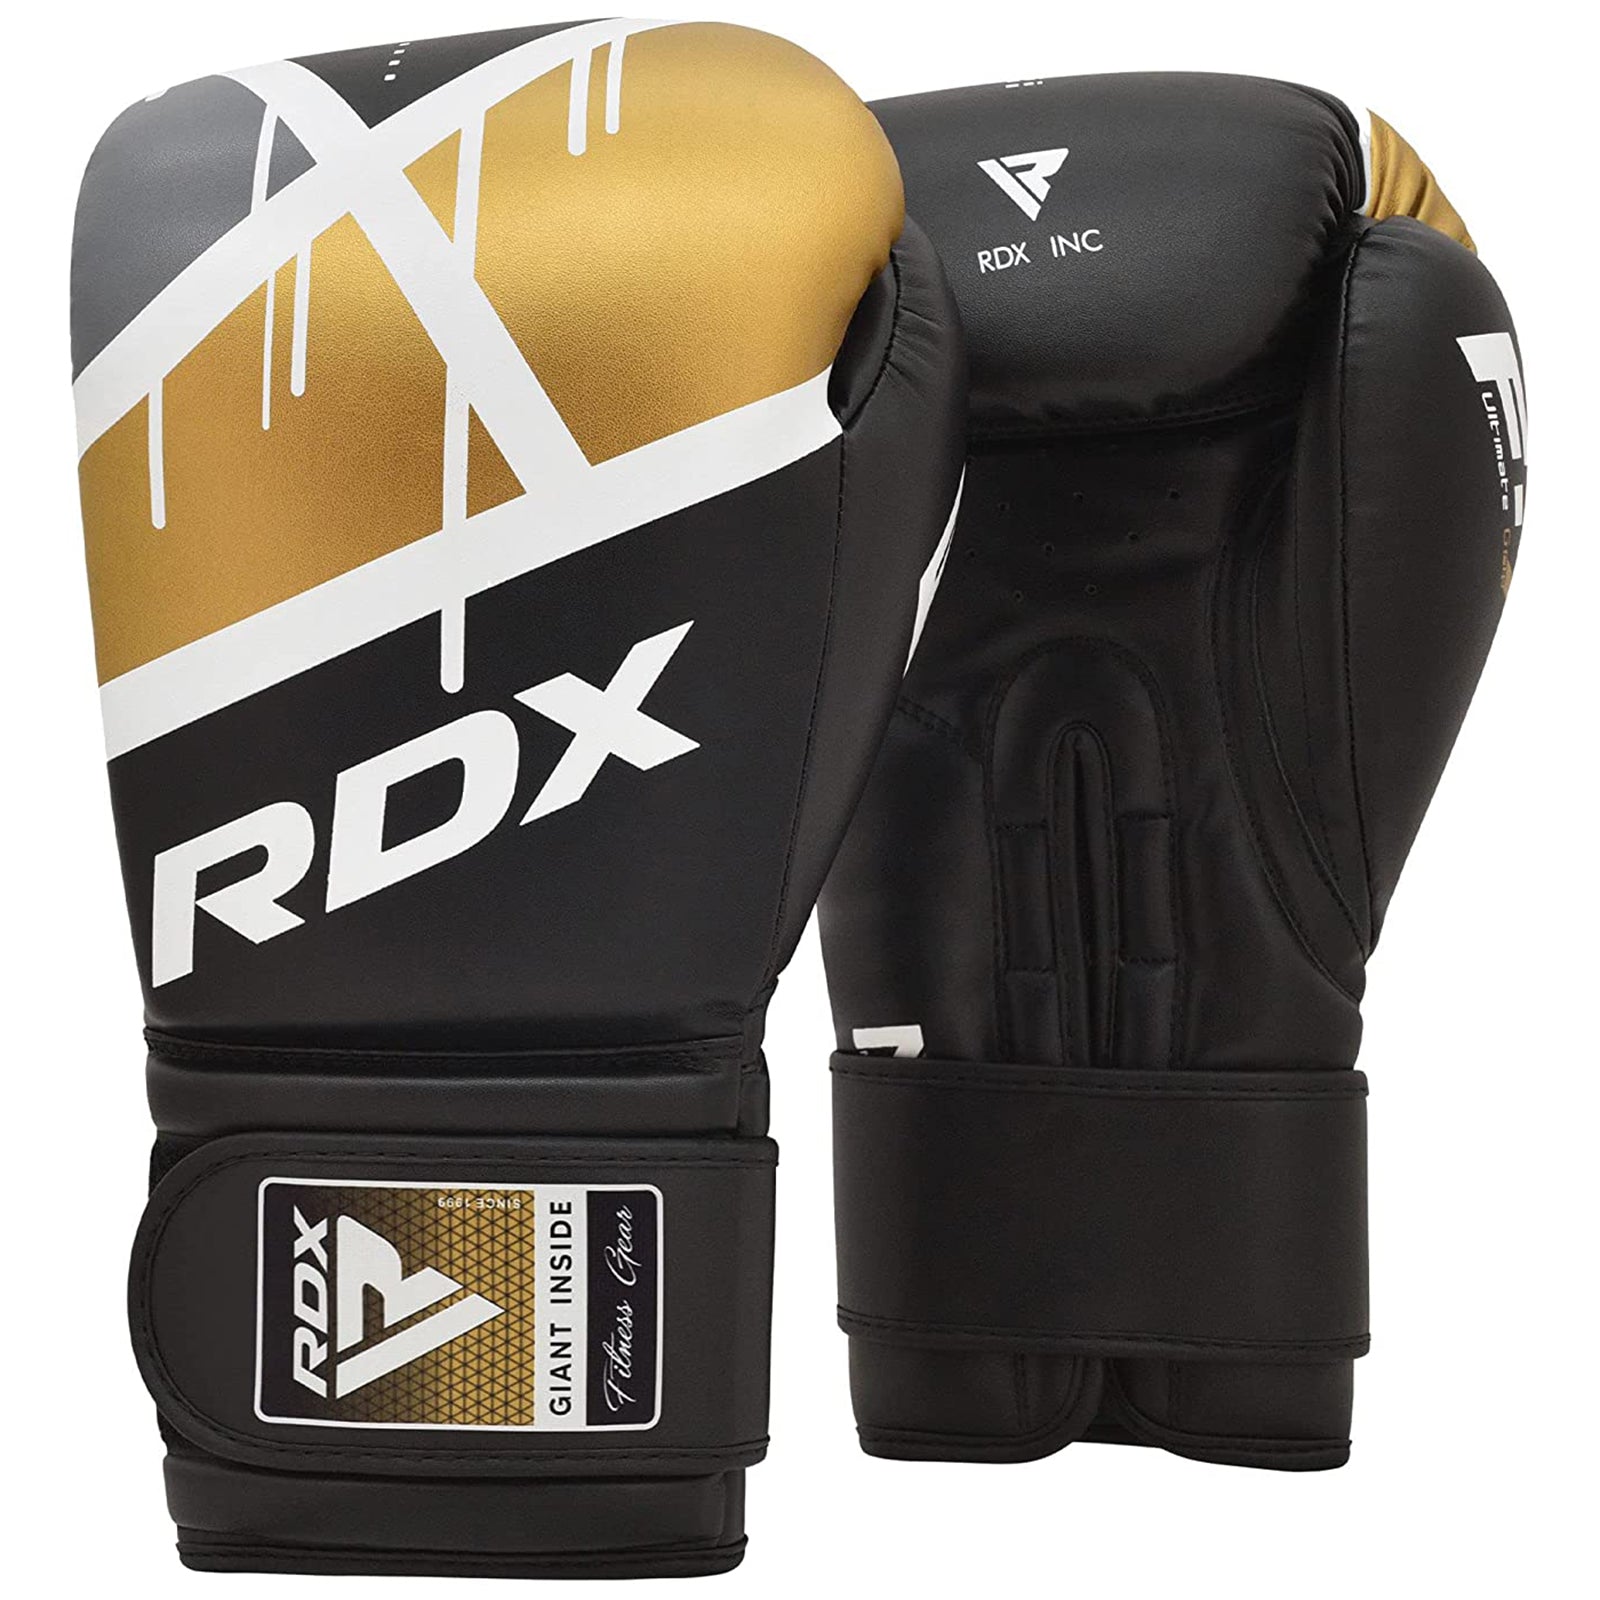 RDX F7 EGO MMA, BJJ, Muay Thai, Kickboxing, Training Boxing Gloves - BLACK GOLDEN - 10oz - Pro-Distributing